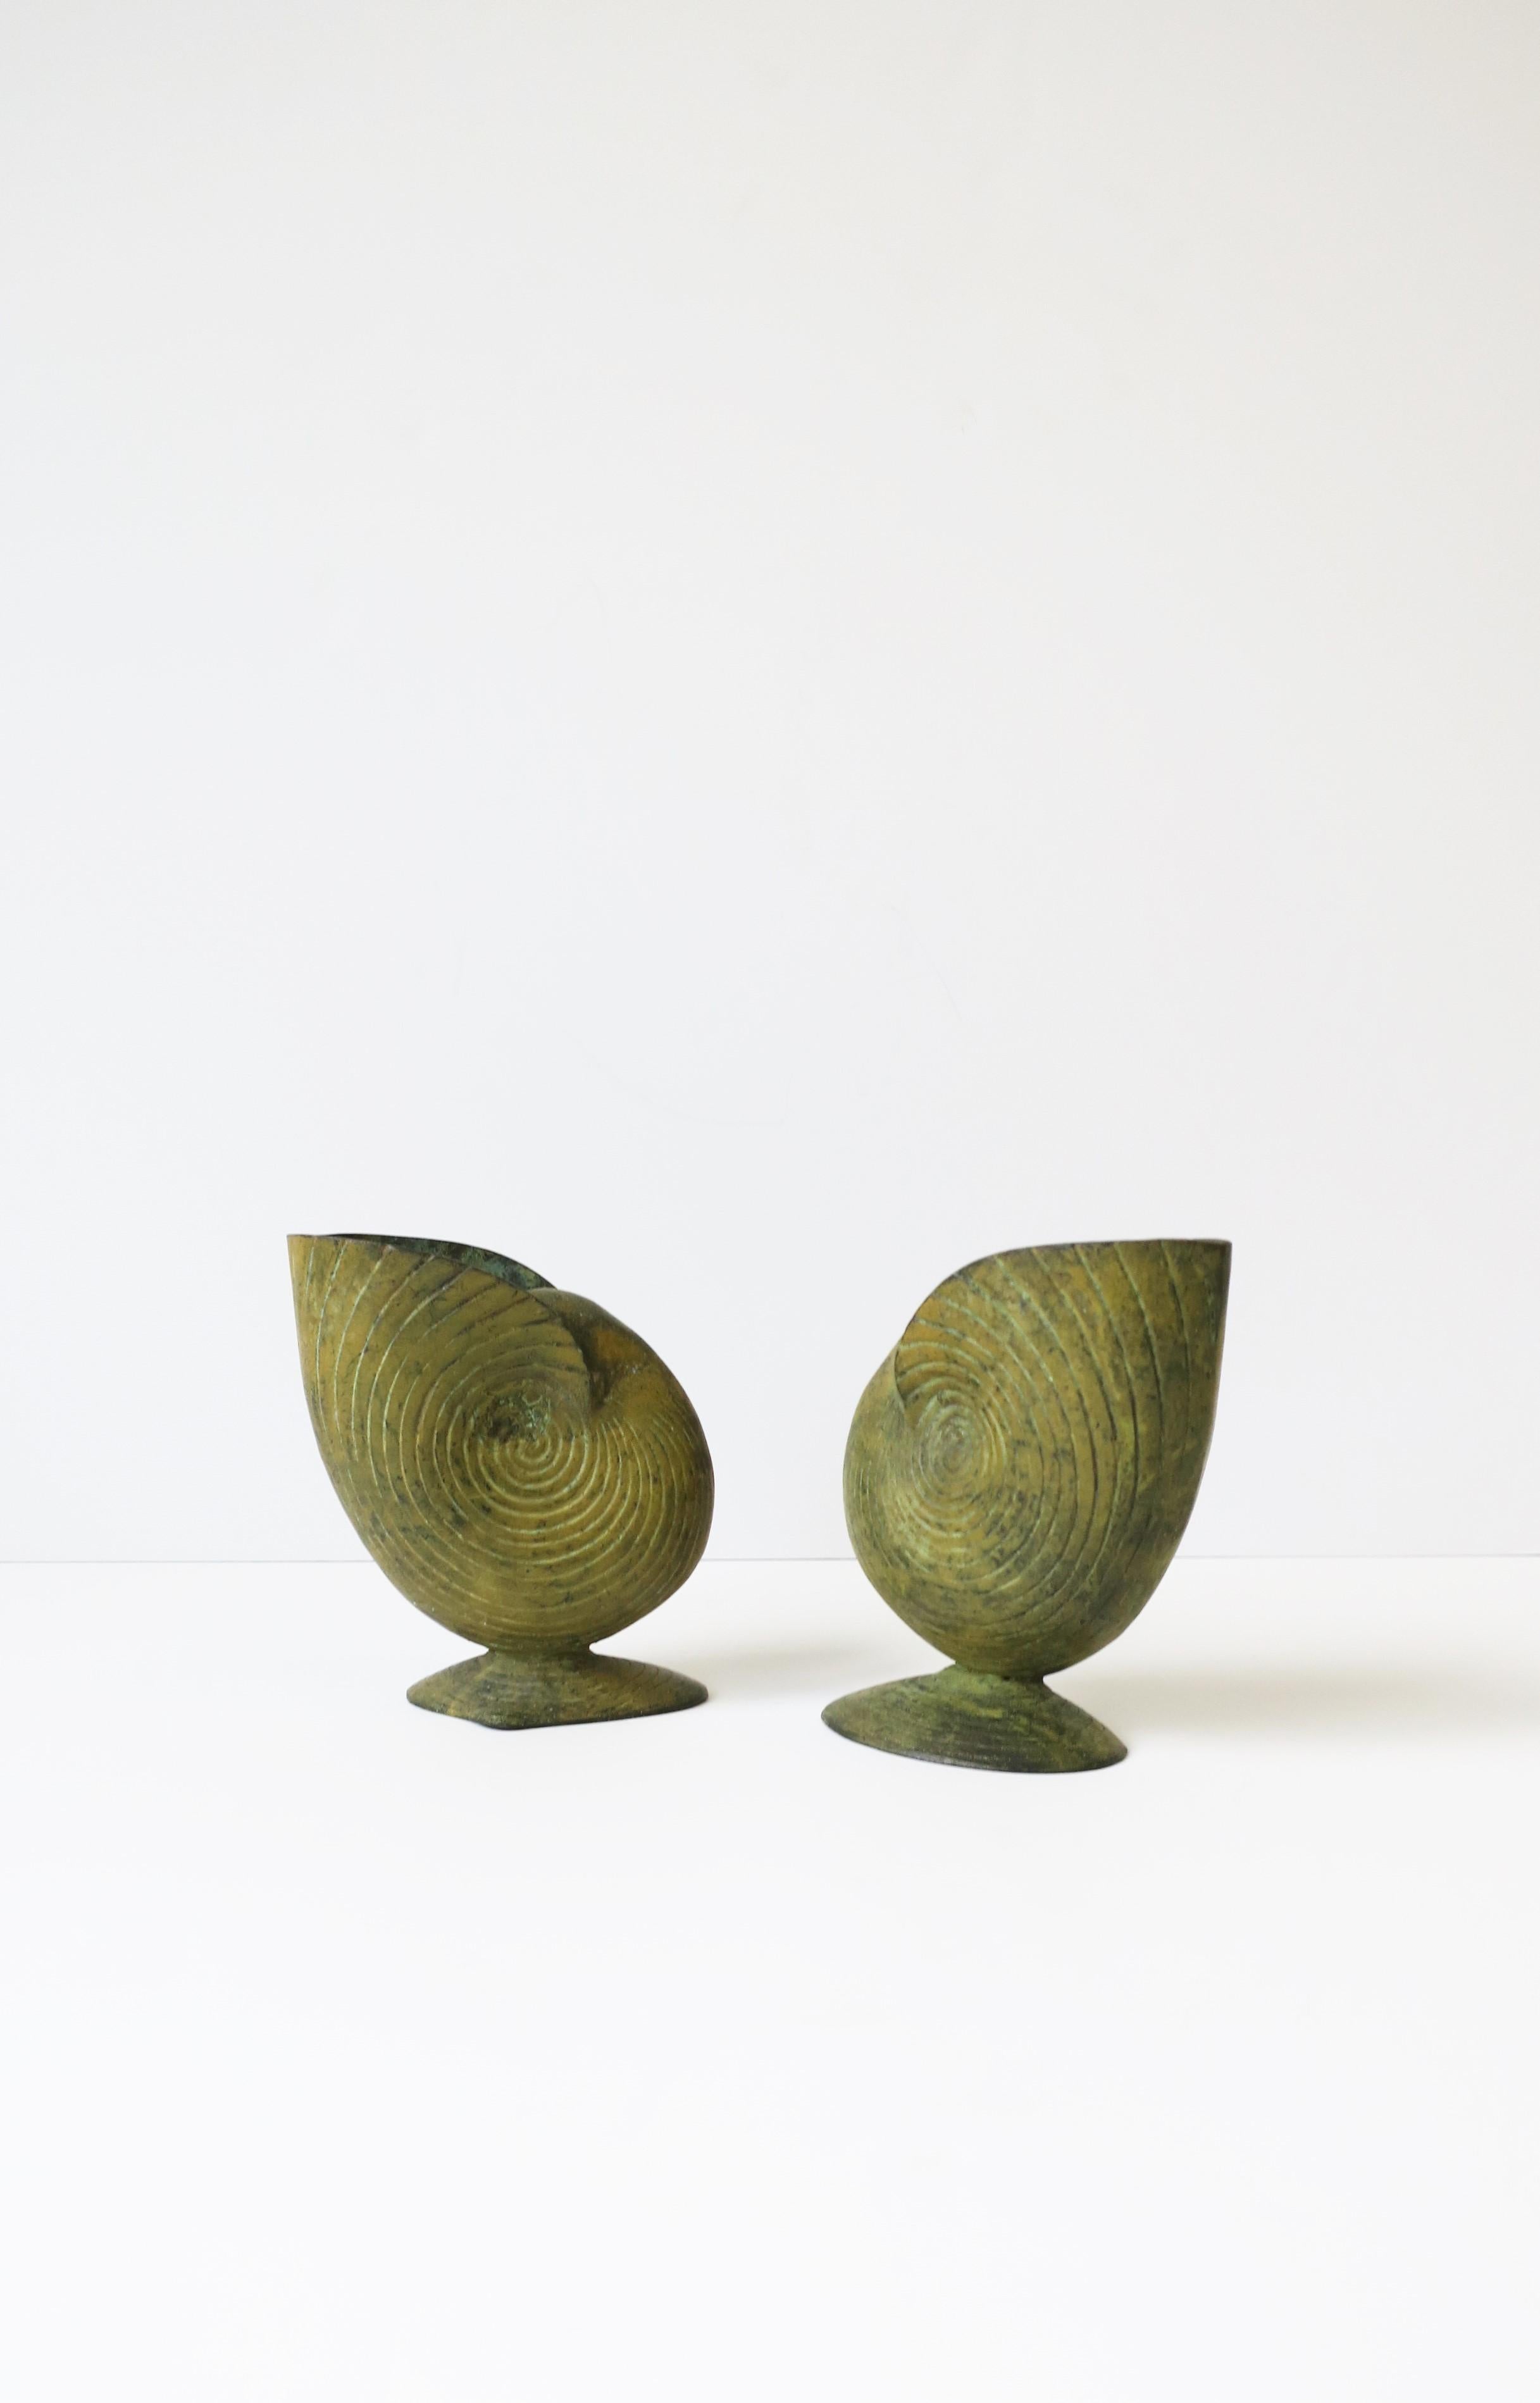 Metal Nautilus Seashell Vases with Yellow Hue, Pair 1